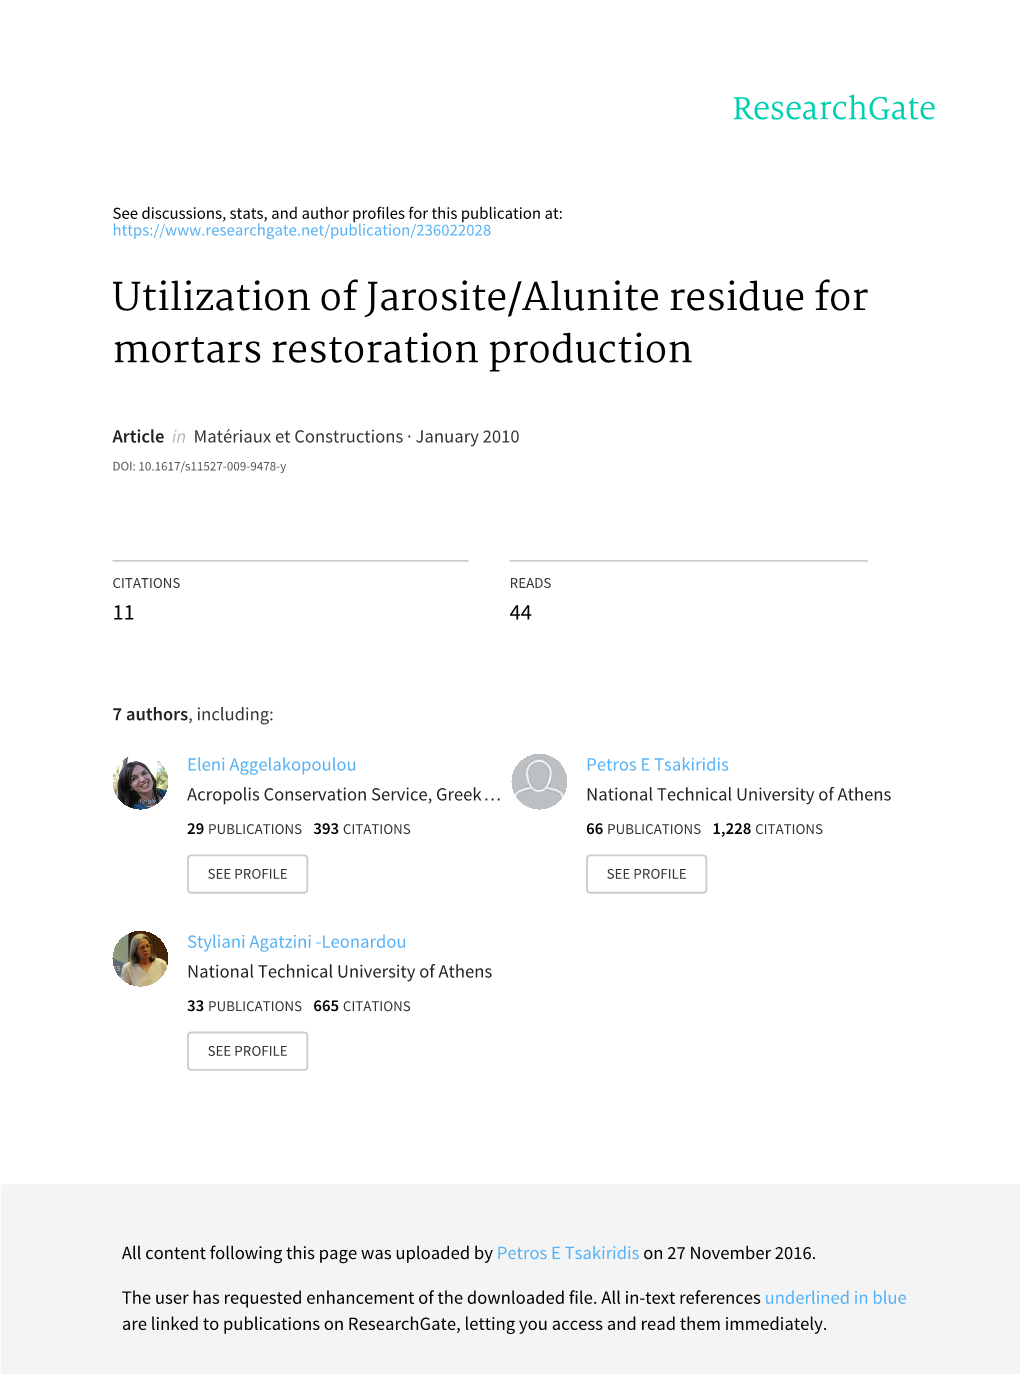 Utilization of Jarosite/Alunite Residue for Mortars Restoration Production